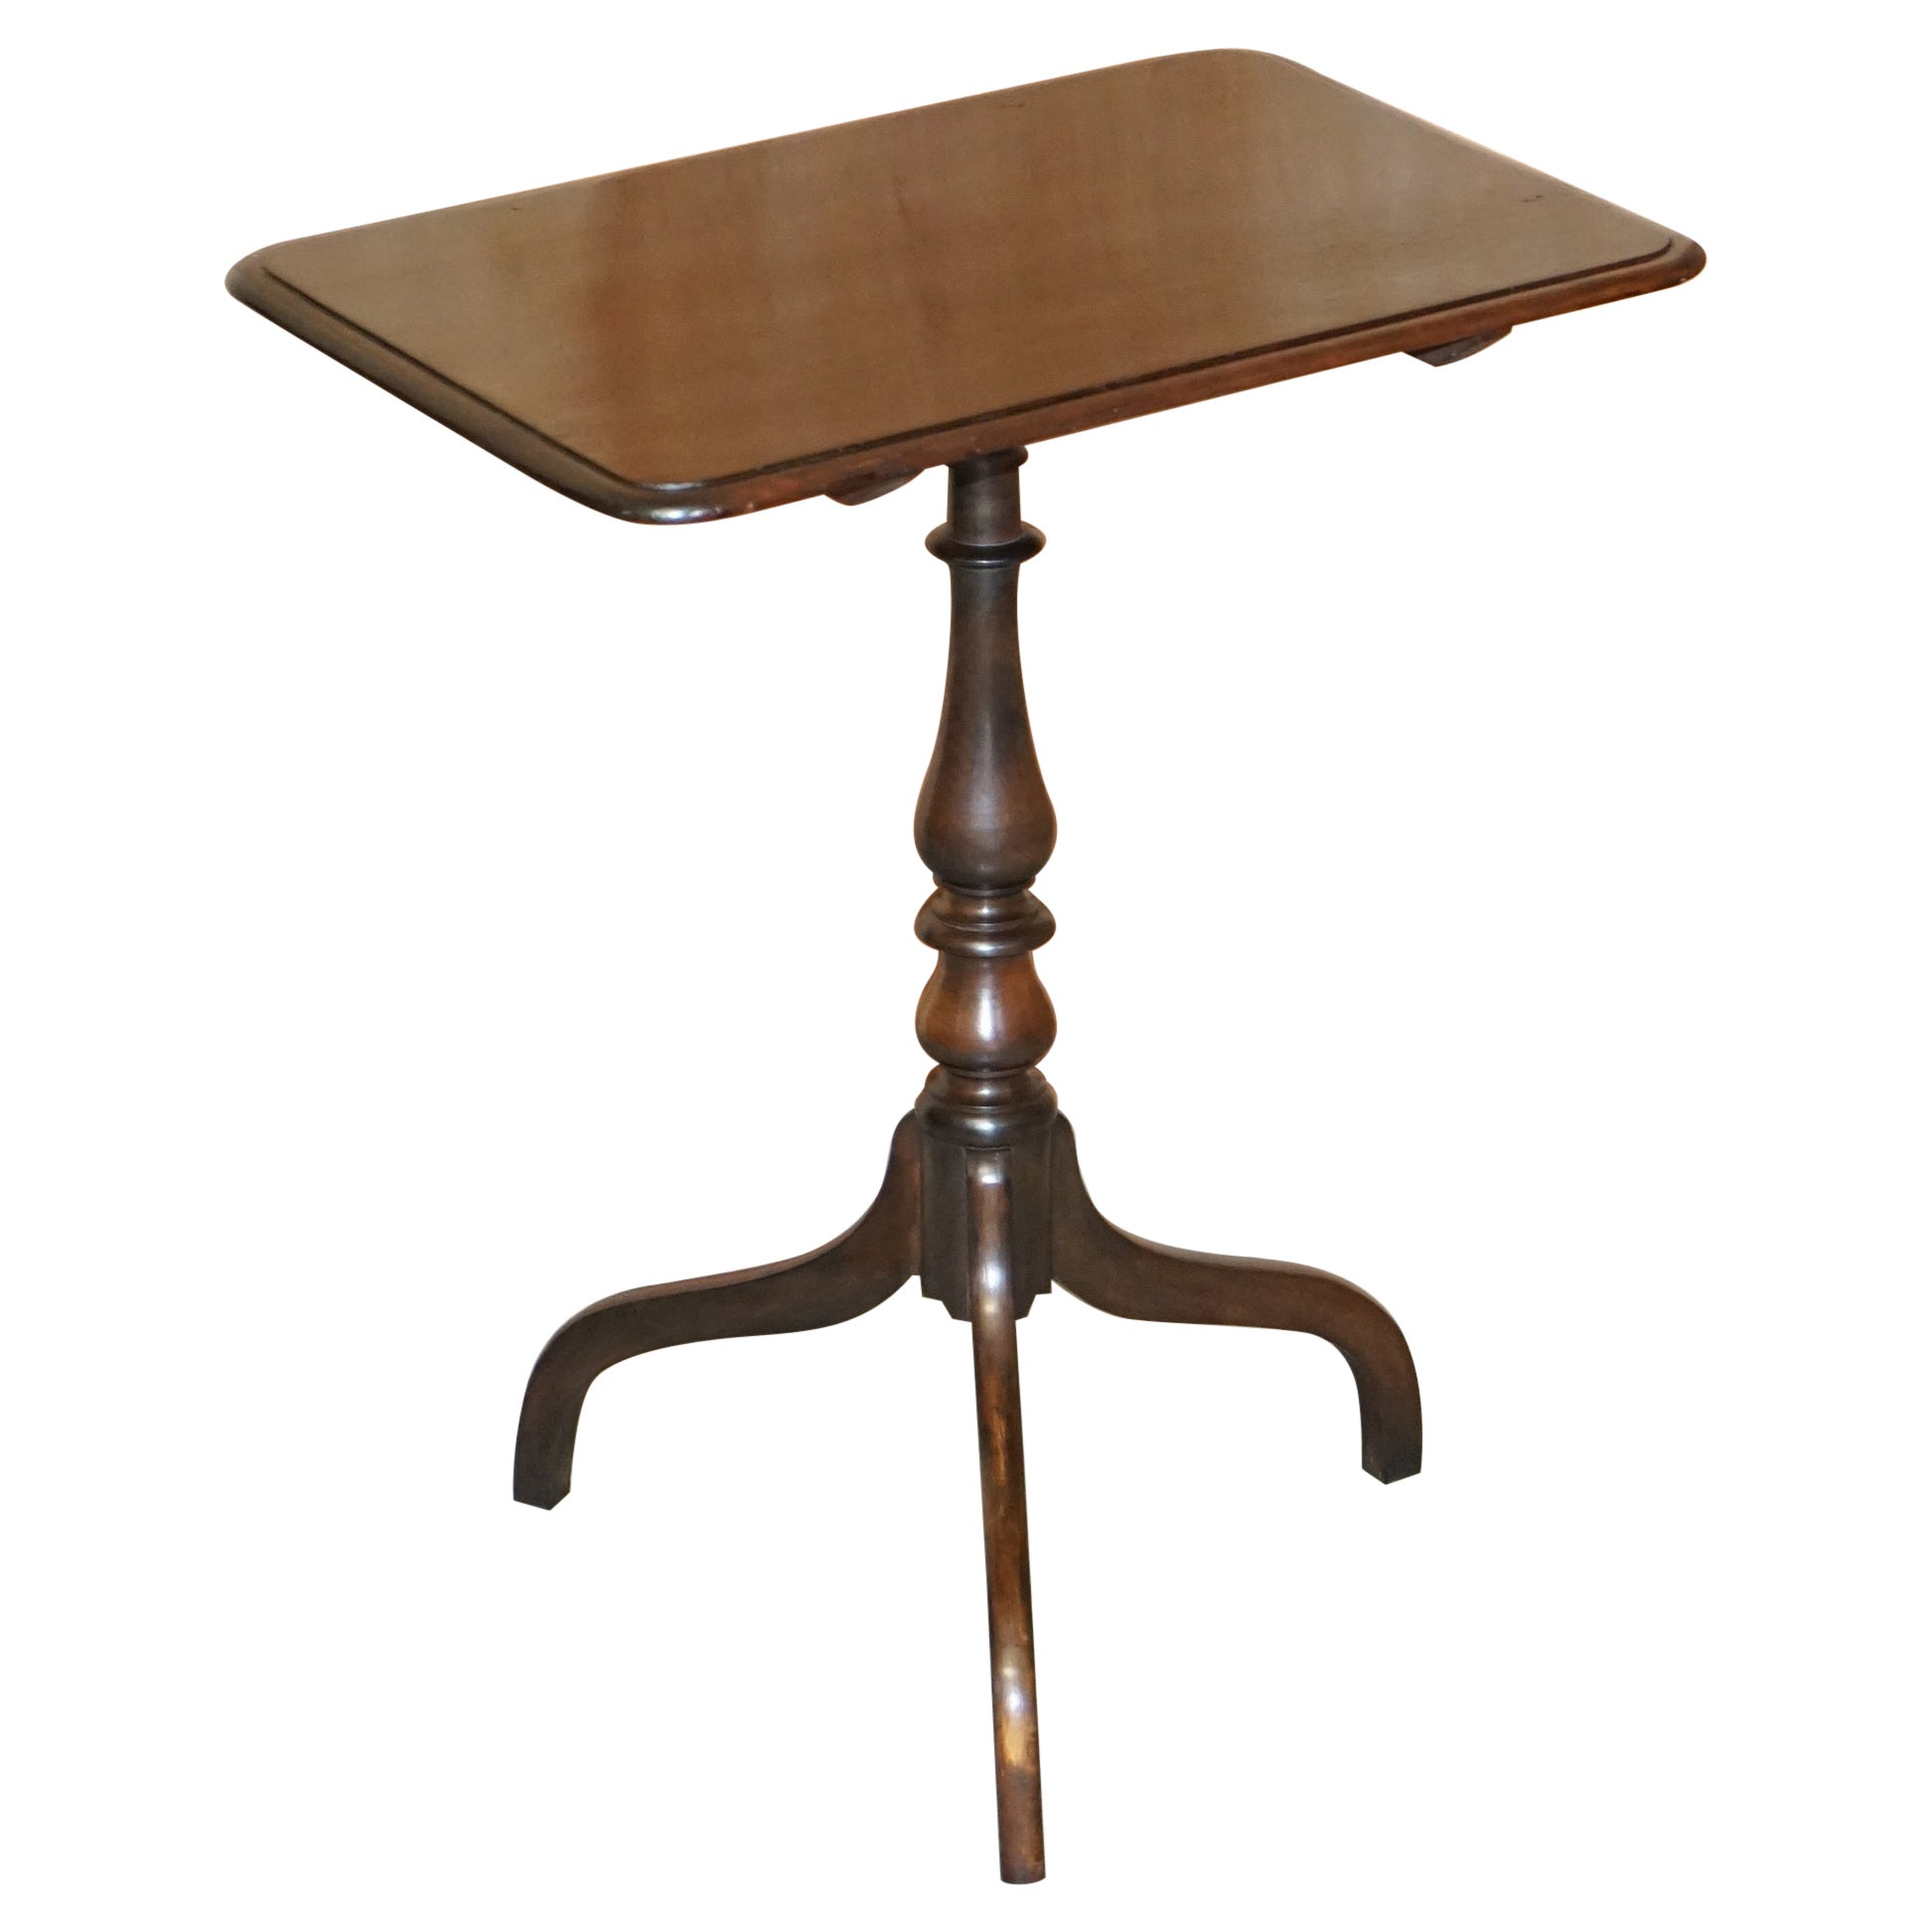 Lovely Circa 1840-1860 English Hardwood Tilt Top Side Occasional Tripod Table